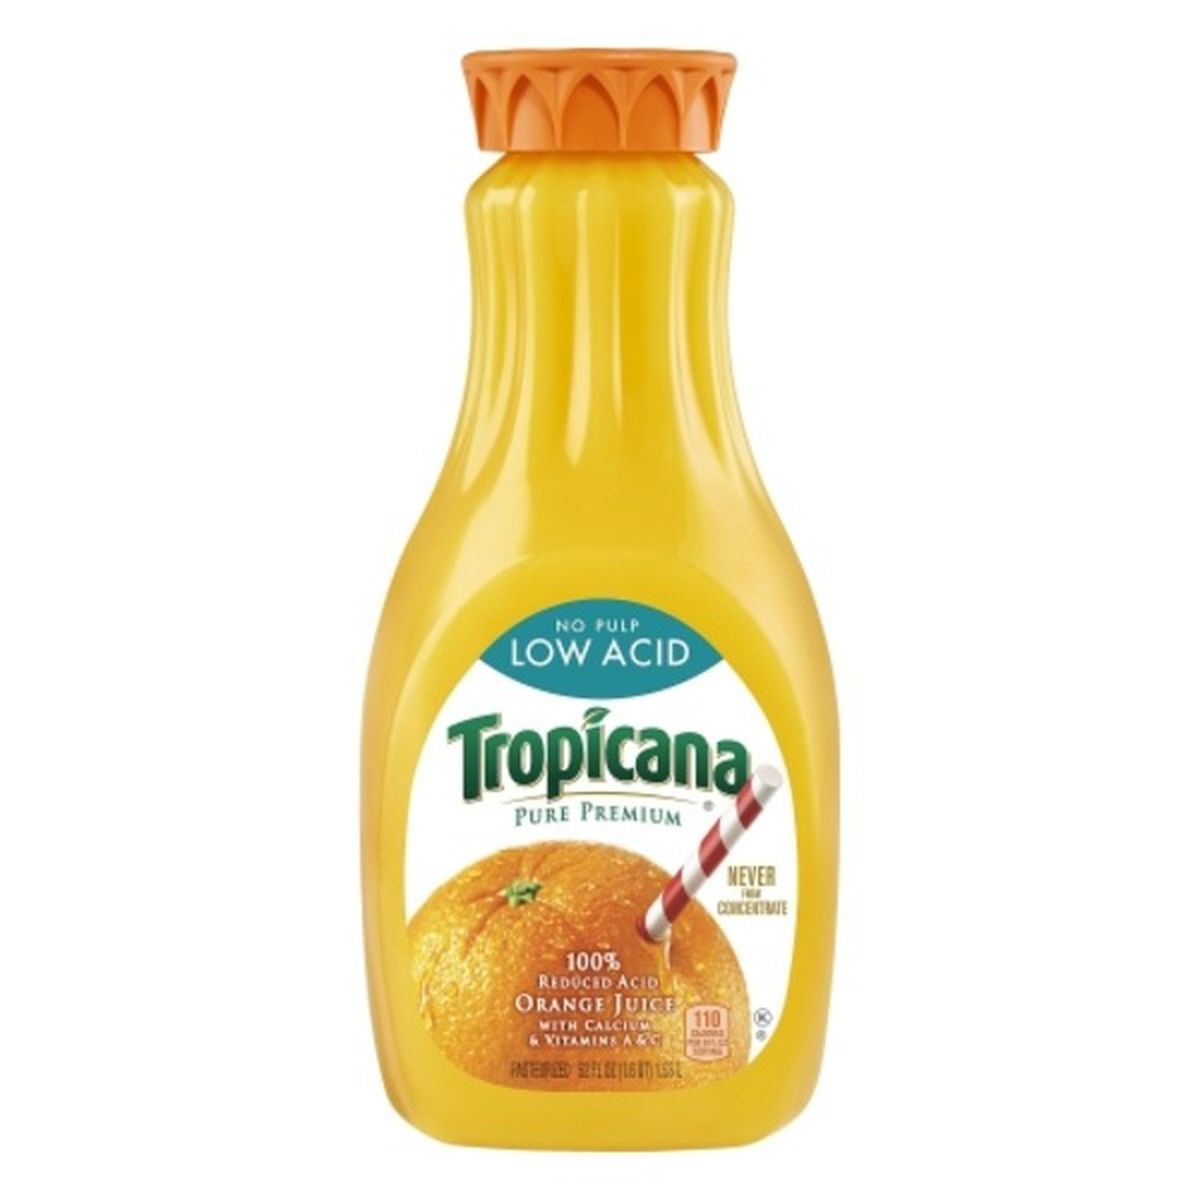 Calories in Tropicana 100% Juice, Low Acid, Orange, No Pulp